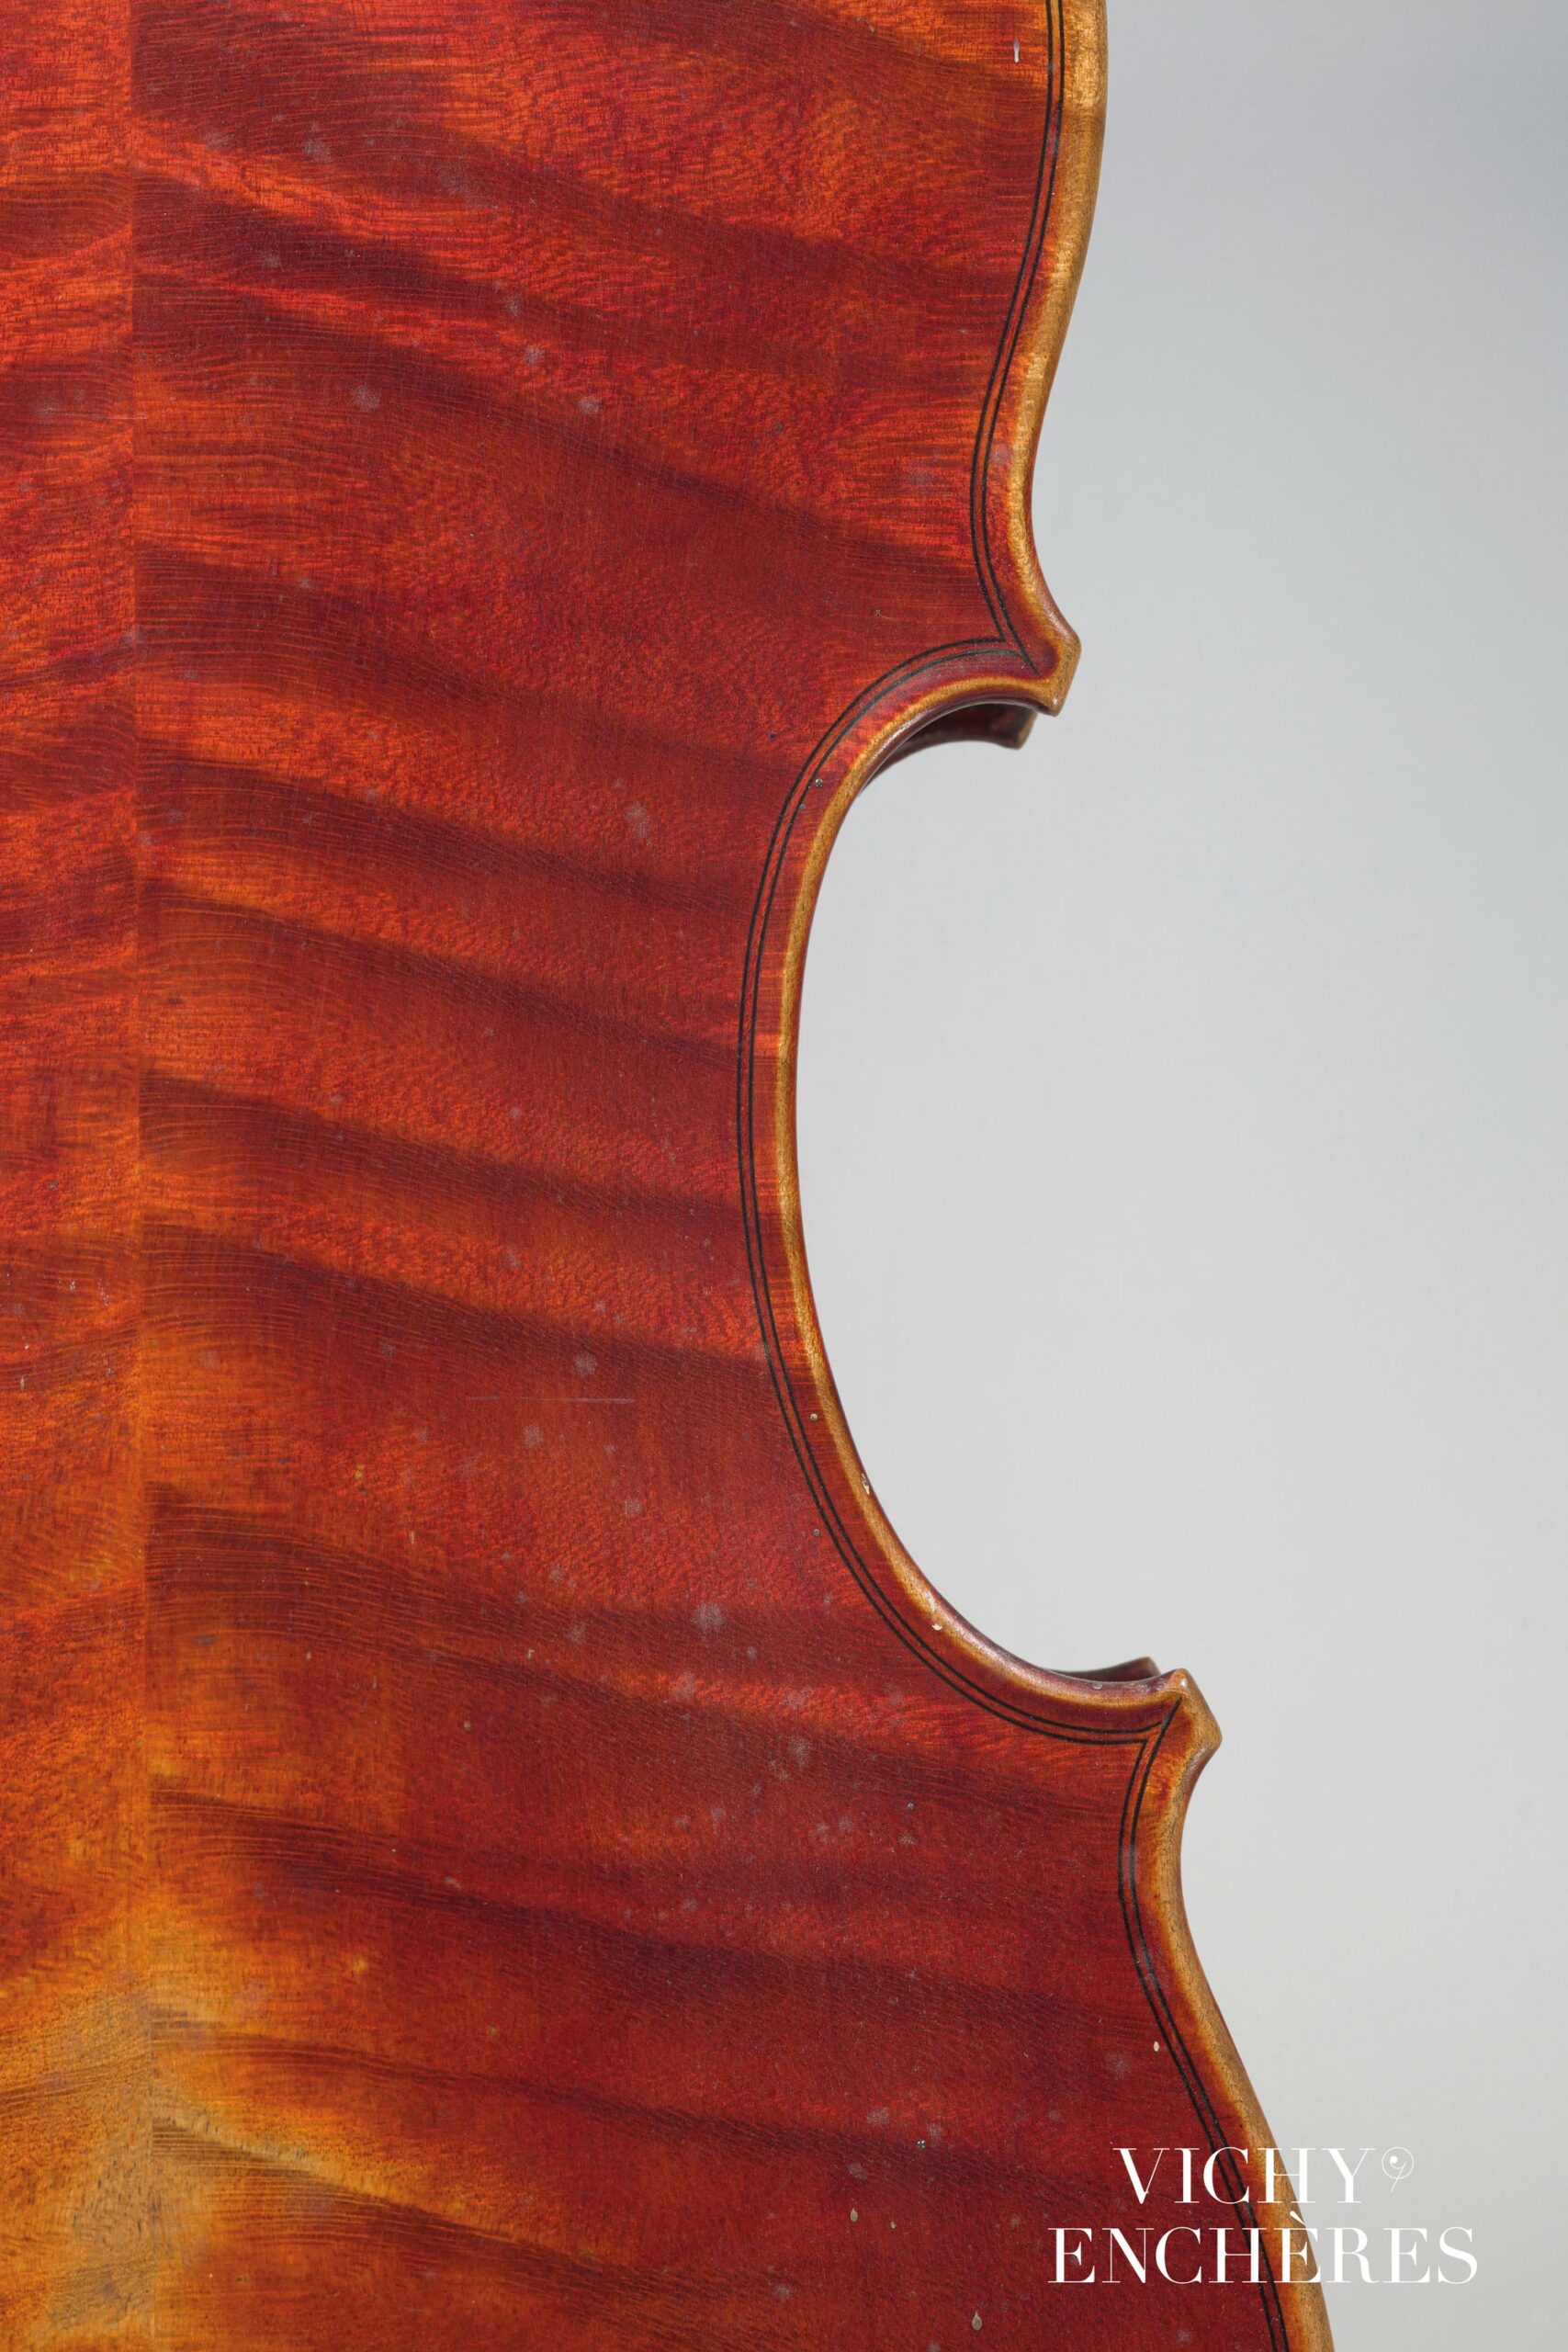 Joli violon de Pierre HEL Instrument mis en vente par Vichy Enchères le 1 juin 2023 © C. Darbelet